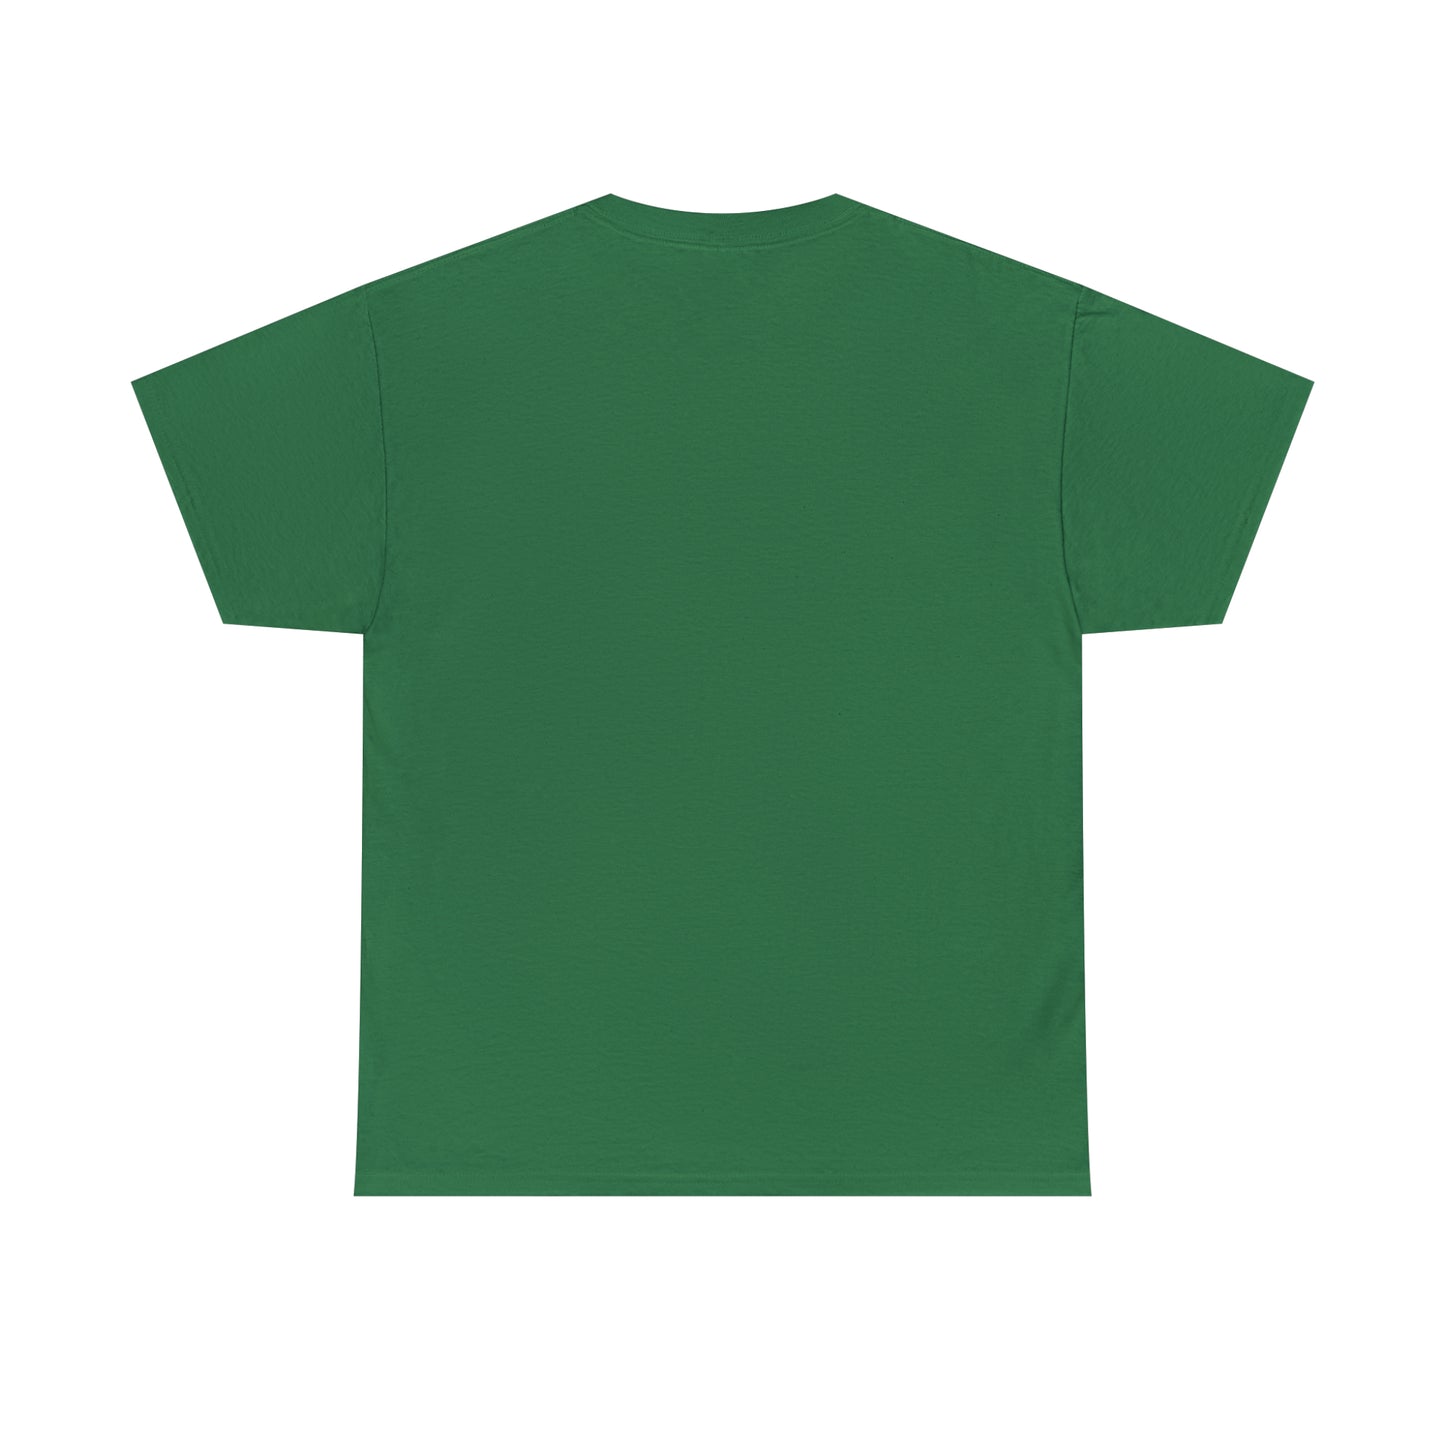 IDIOT CULTURE Unisex T-Shirt